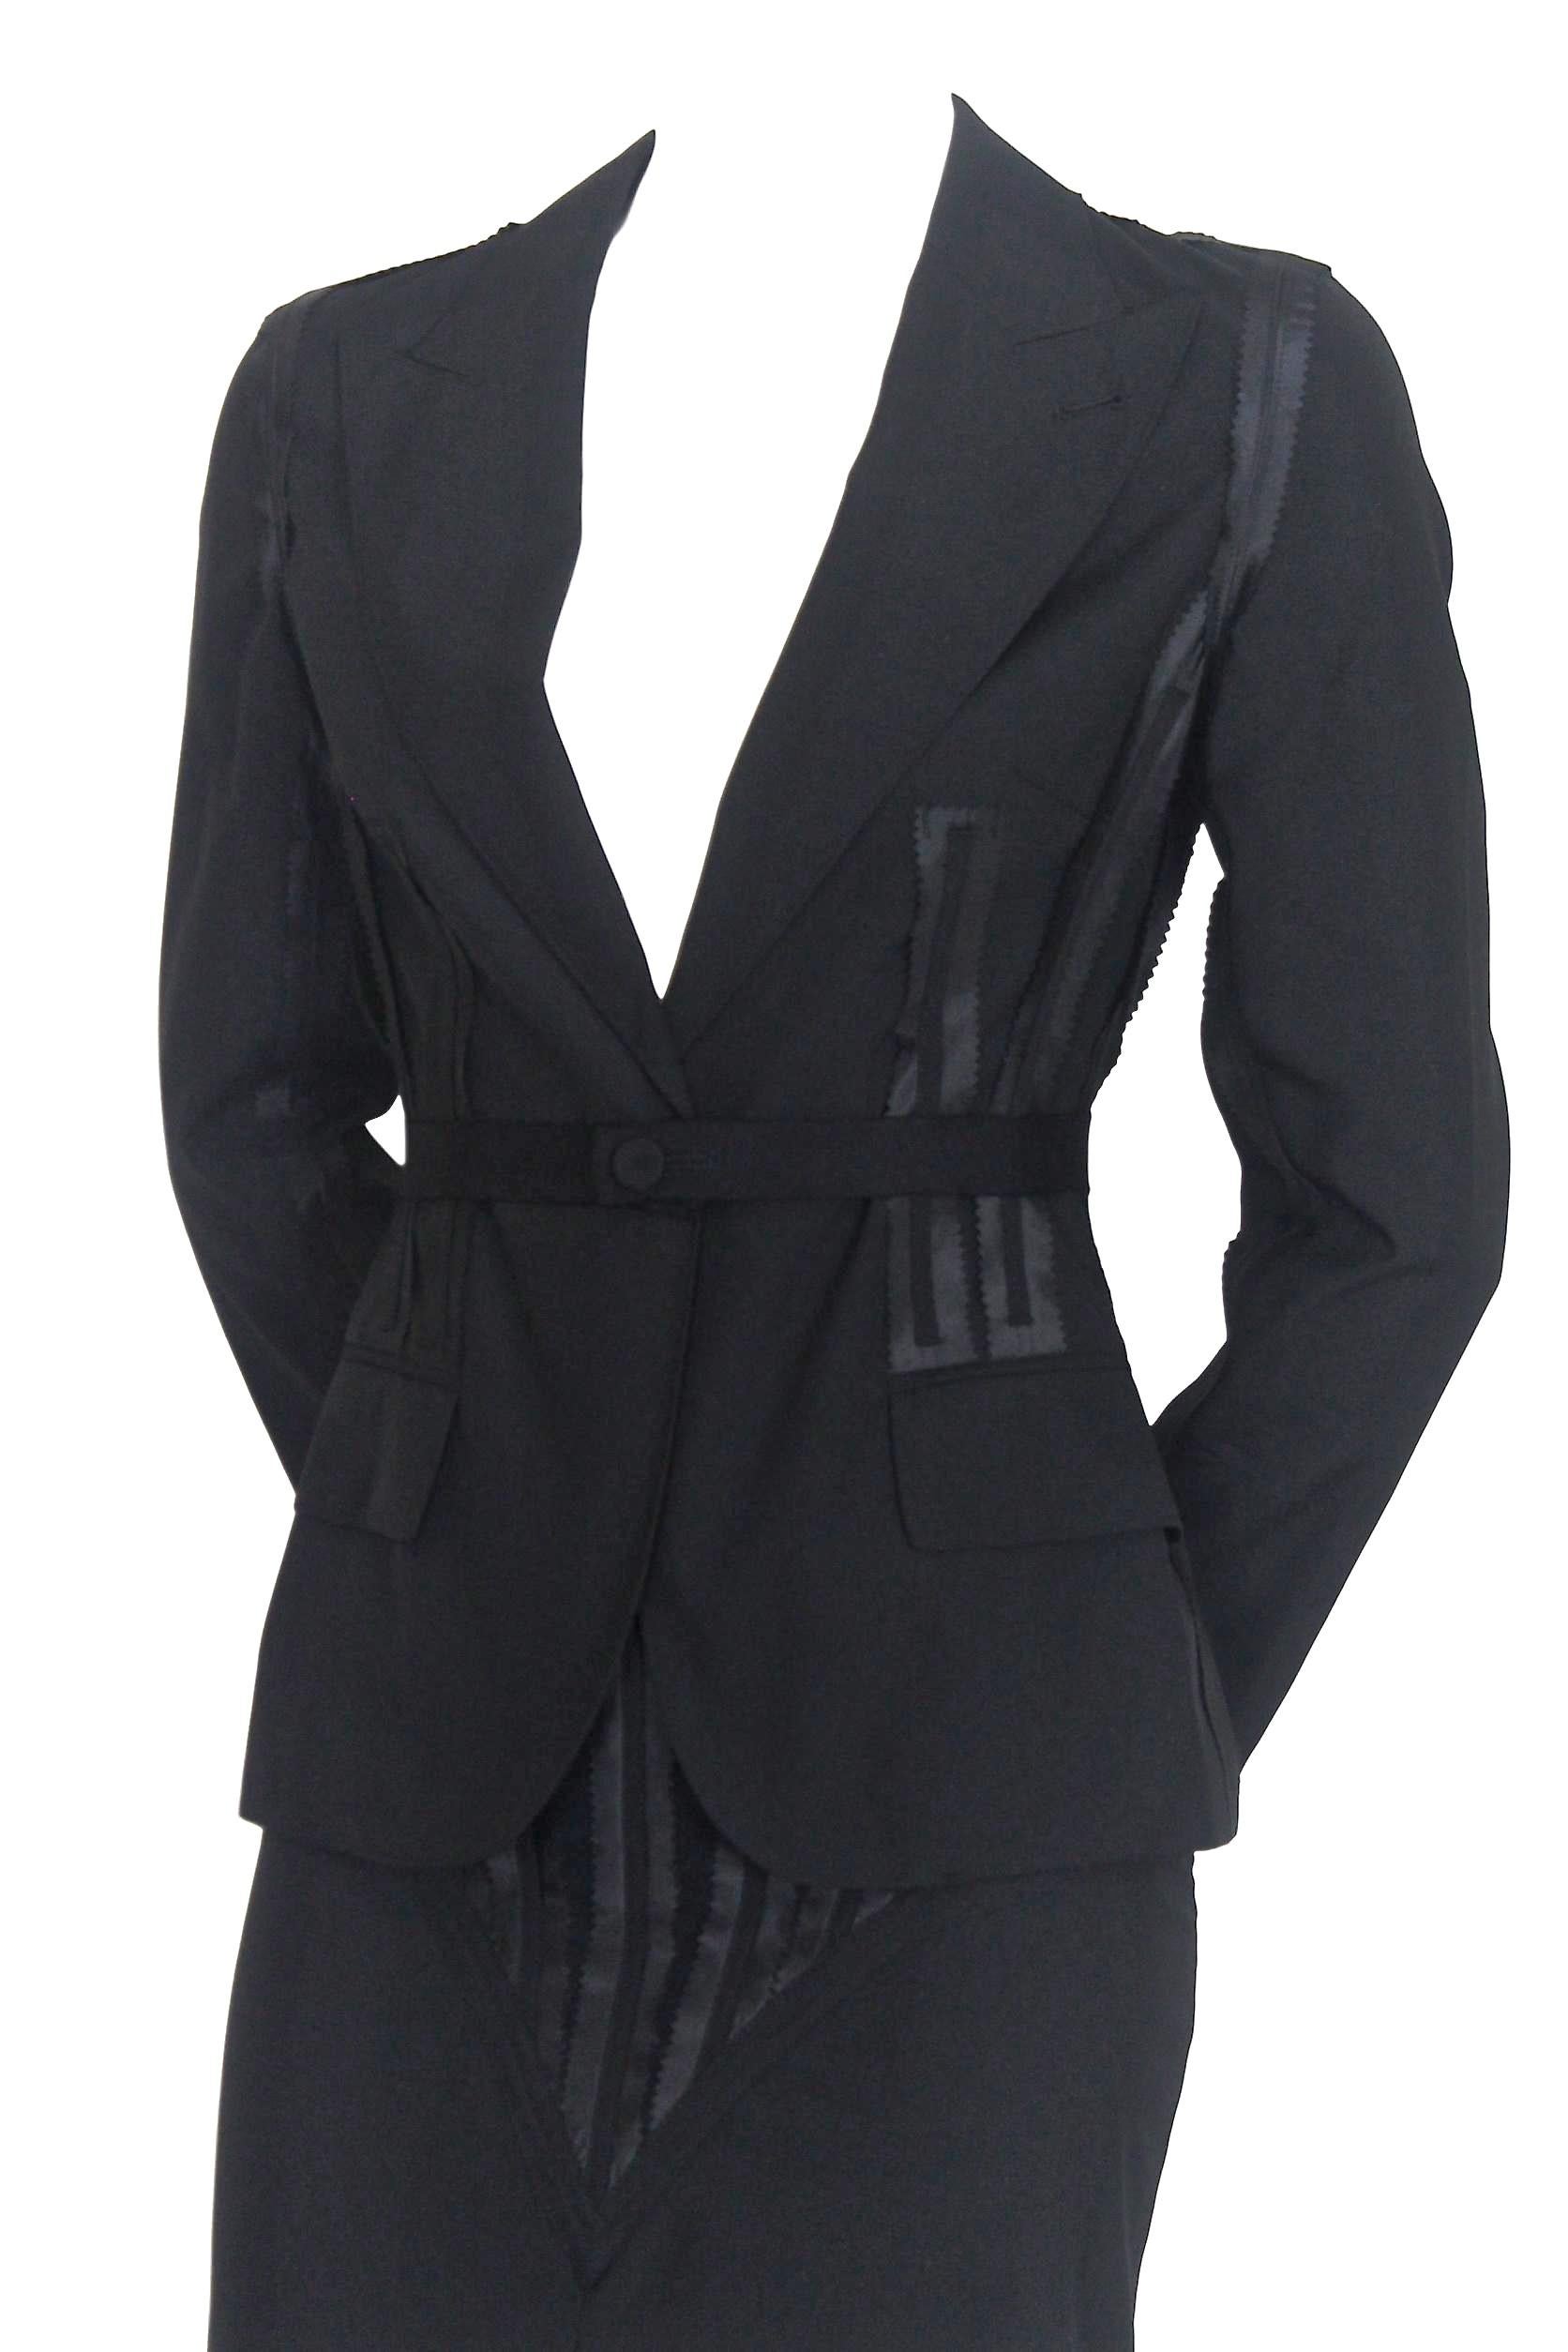 Jean Paul Gaultier 1990s Corset Jacket and Skirt Suit 3